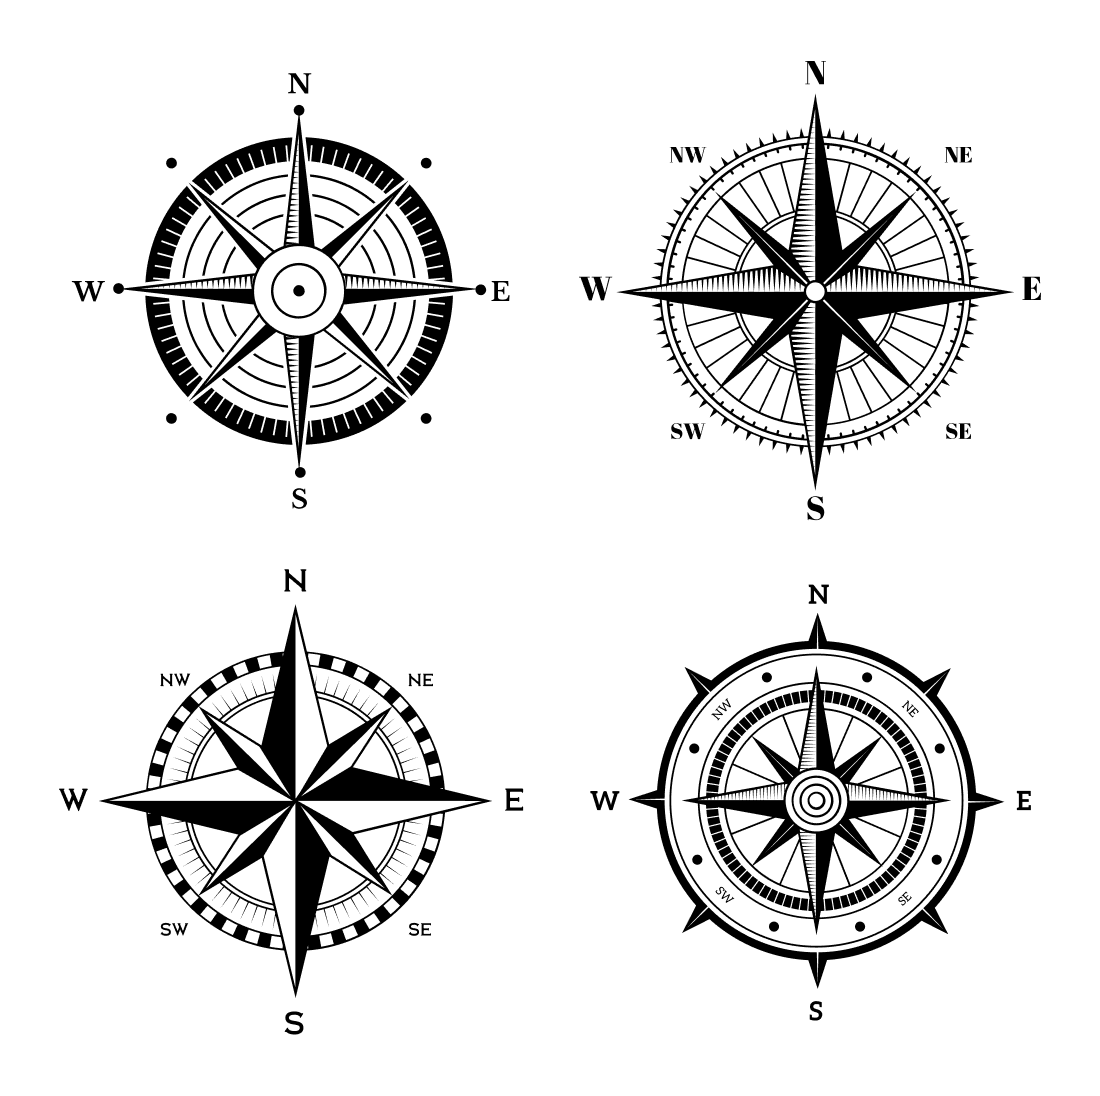 Compass Rose SVG – MasterBundles